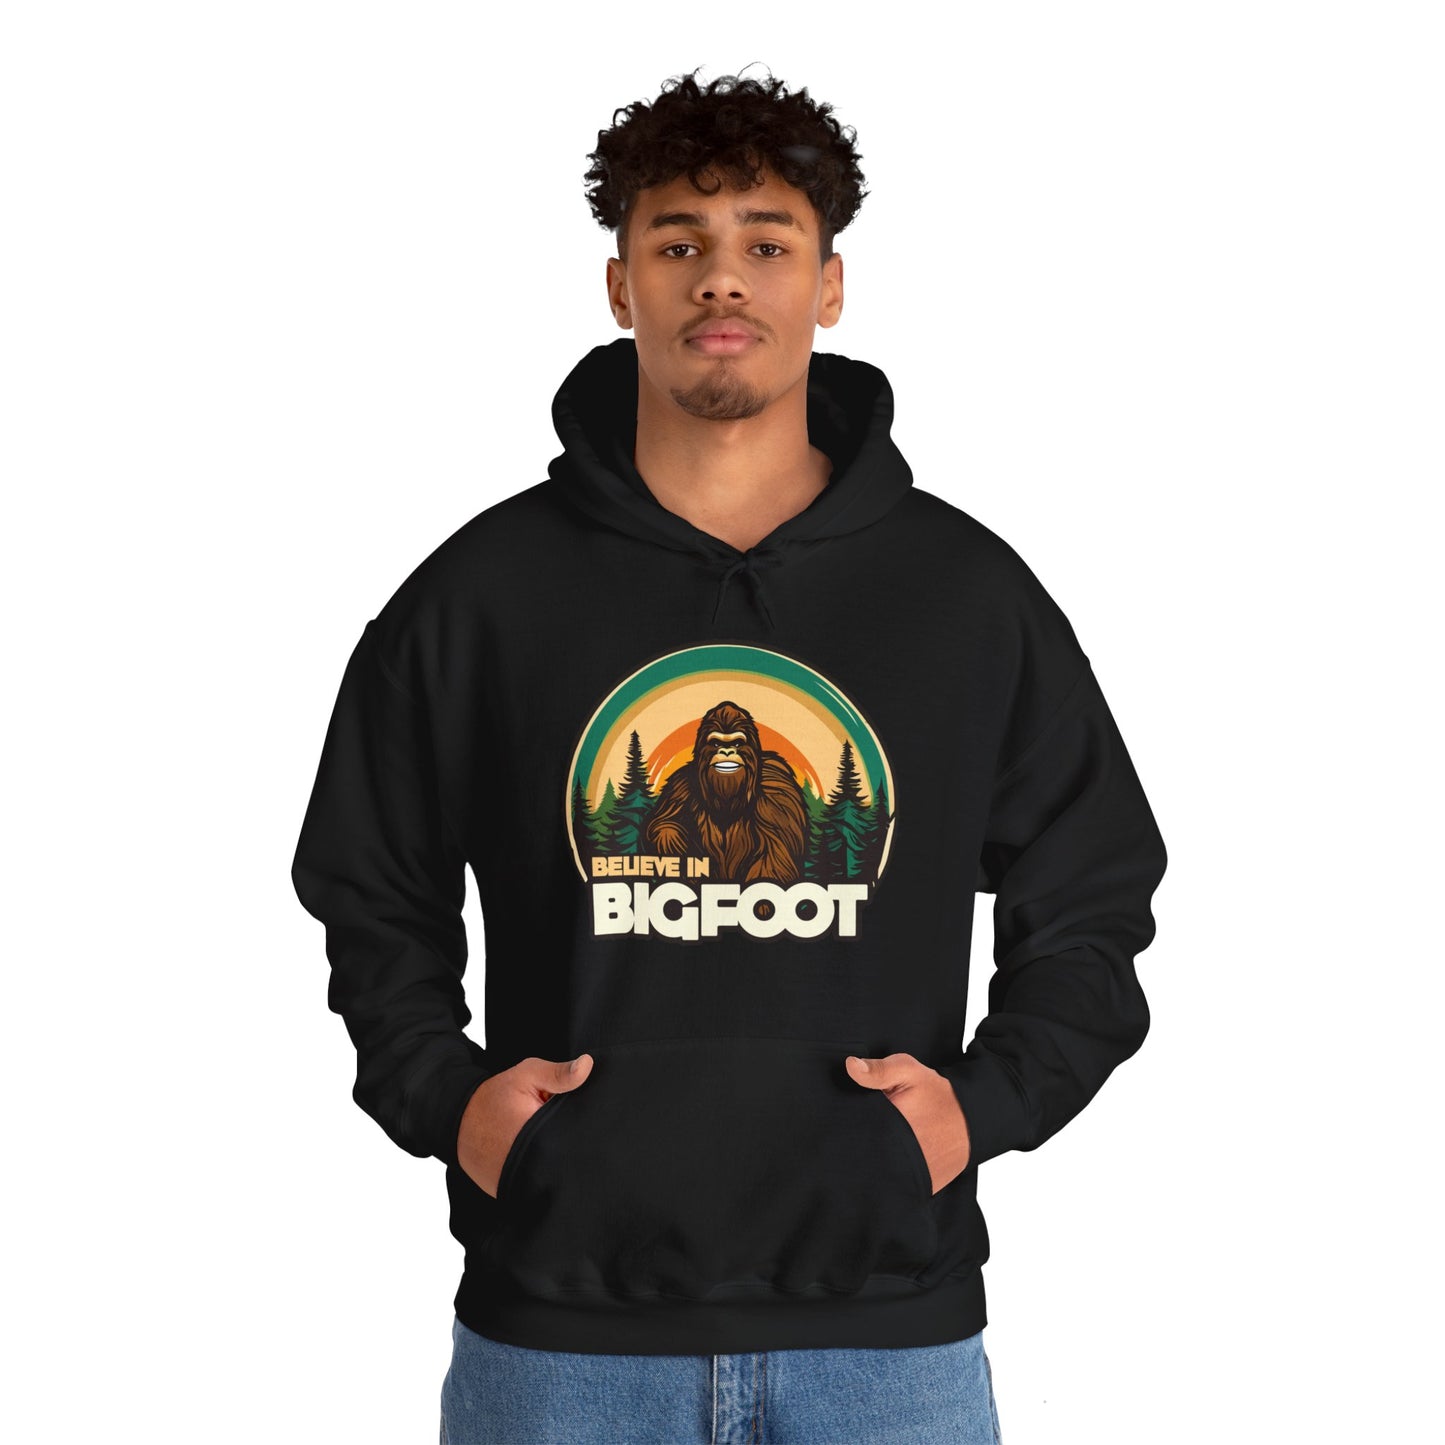 Believe in Bigfoot Unisex Adult Hooded Heavy Blend Sweatshirt